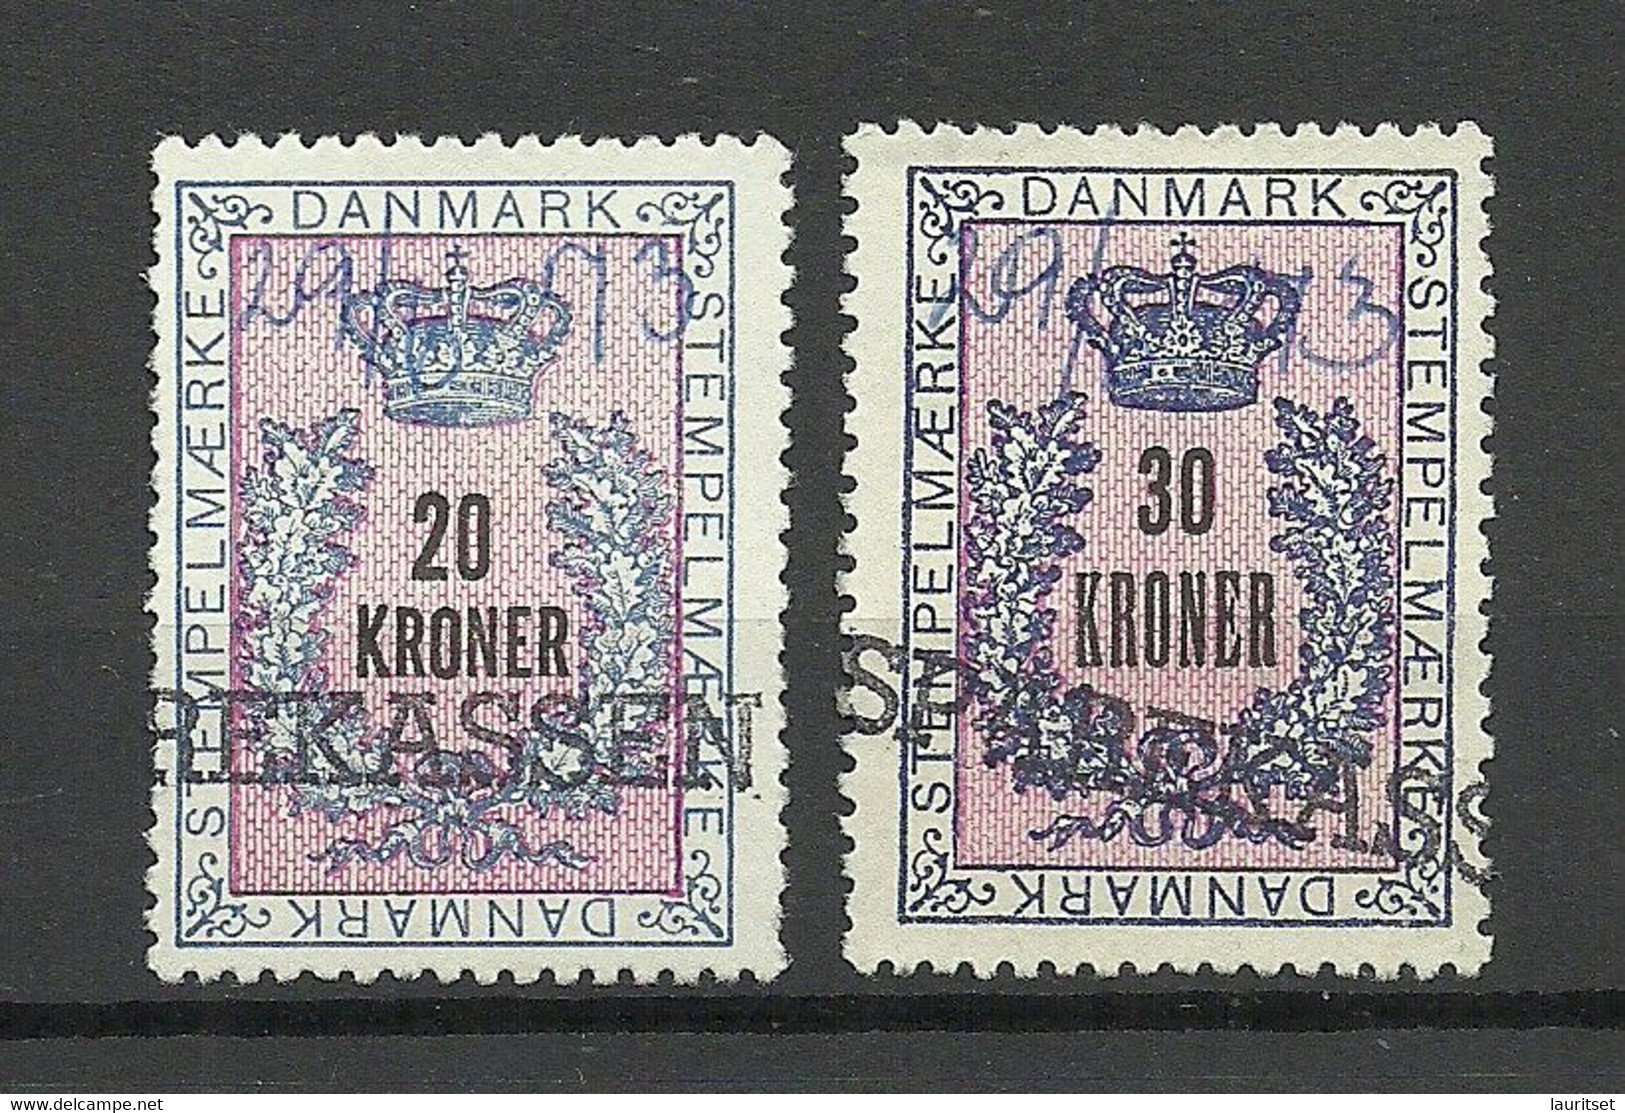 DENMARK Dänemark O 1973 Sparekassen Tax Stempelmarken Documentary Taxe Revenue Samps - Fiscale Zegels